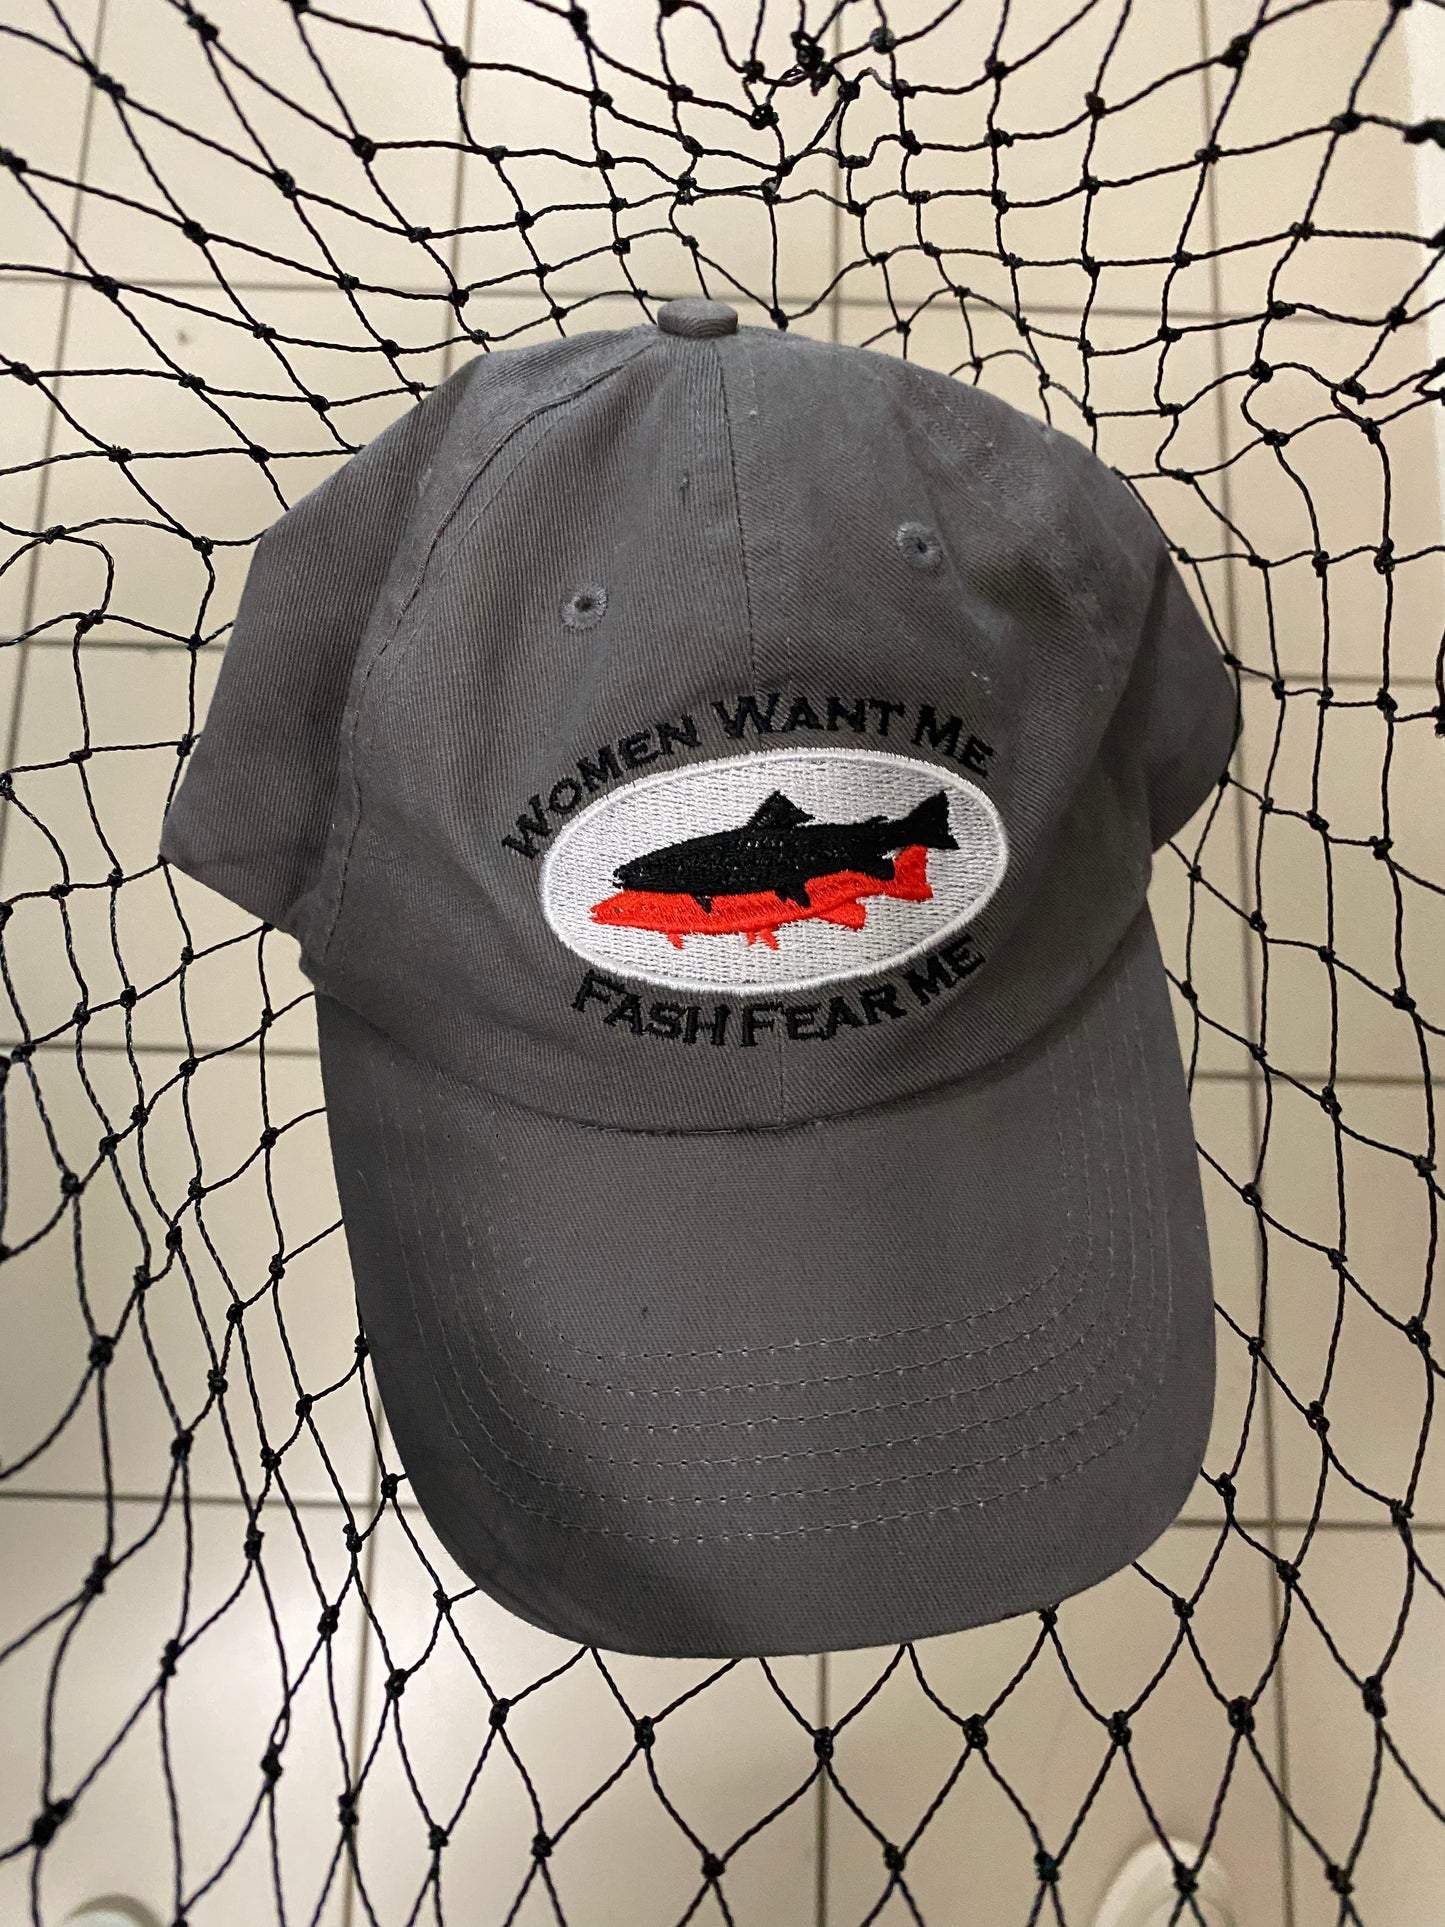 "Women Want Me, Fash Fear Me" fishing dad hat